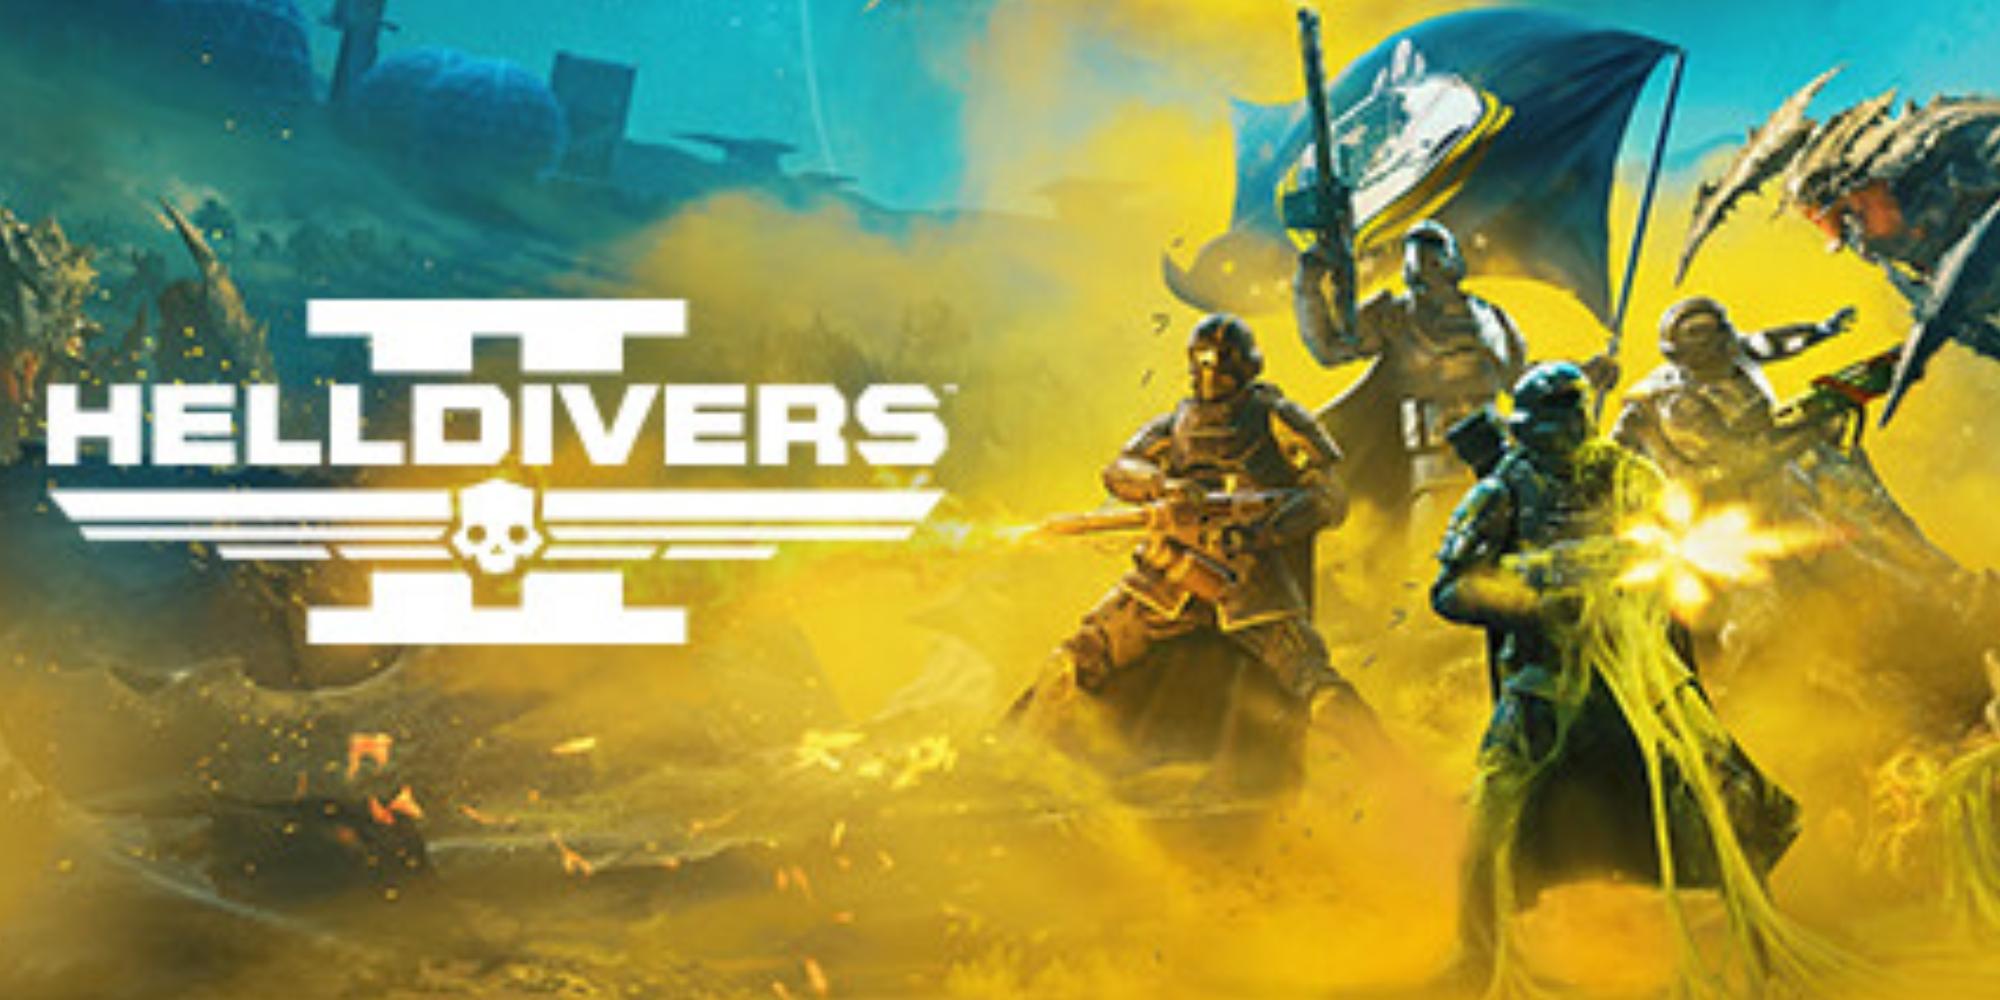 Cover Image for Helldivers 2 Sucesso de vendas continua